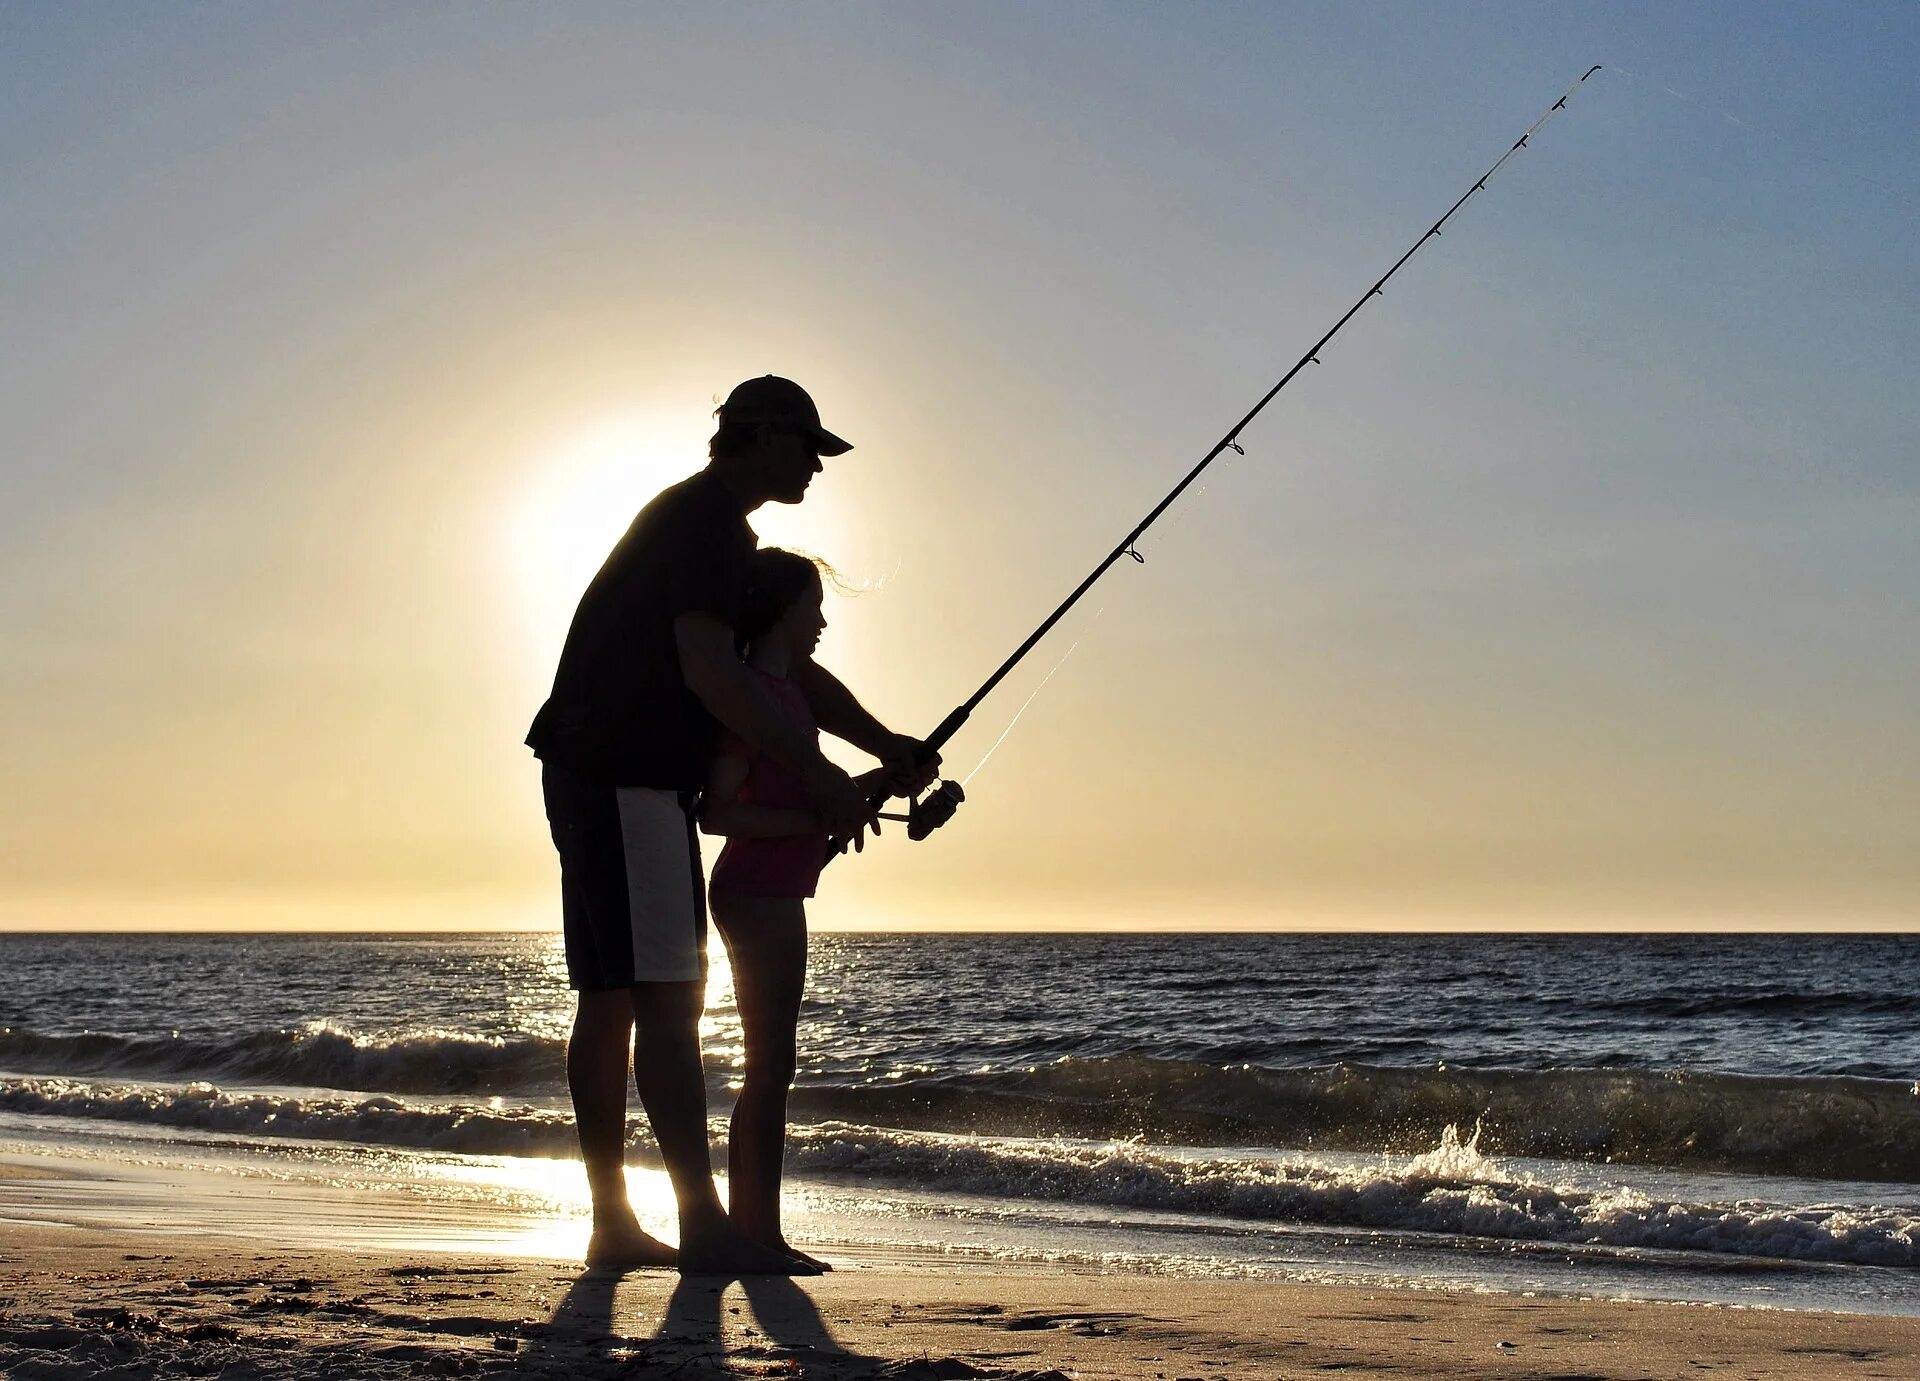 Папа ловил рыбу. Любовь на рыбалке. Отец и дочь рыбачат. Рыбак картинка. Любовная рыбалка.